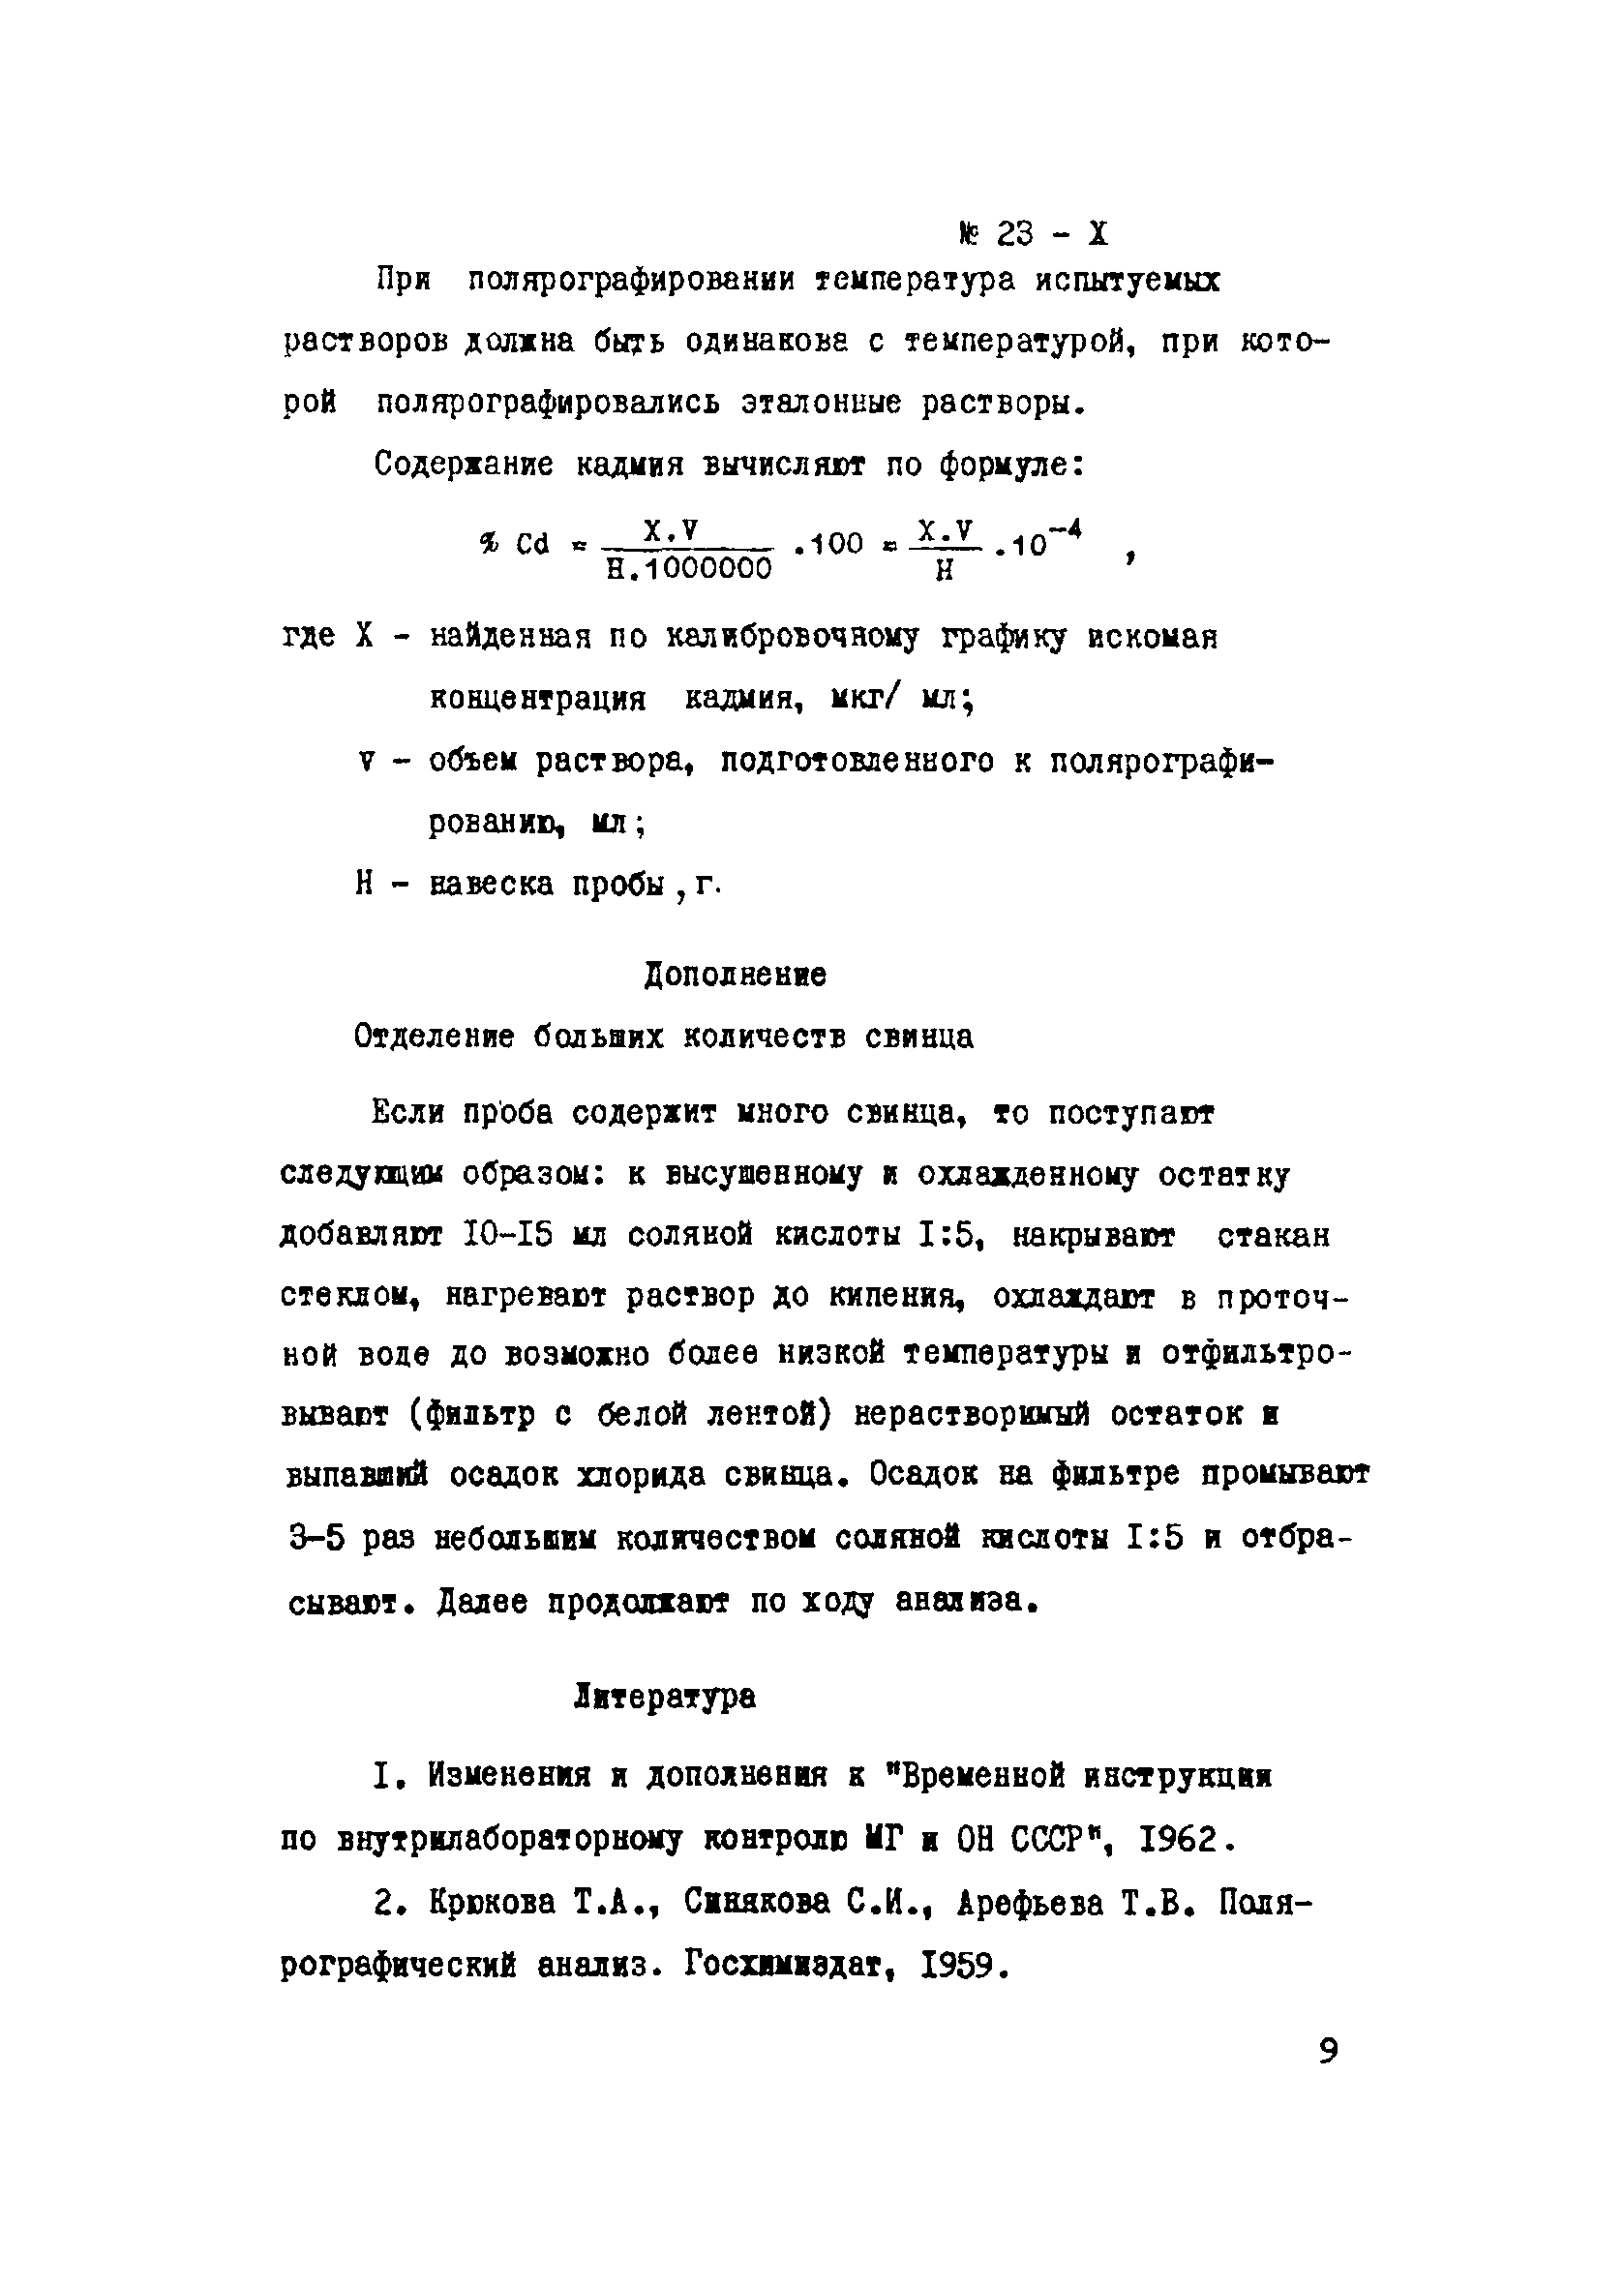 Инструкция НСАМ 23-Х